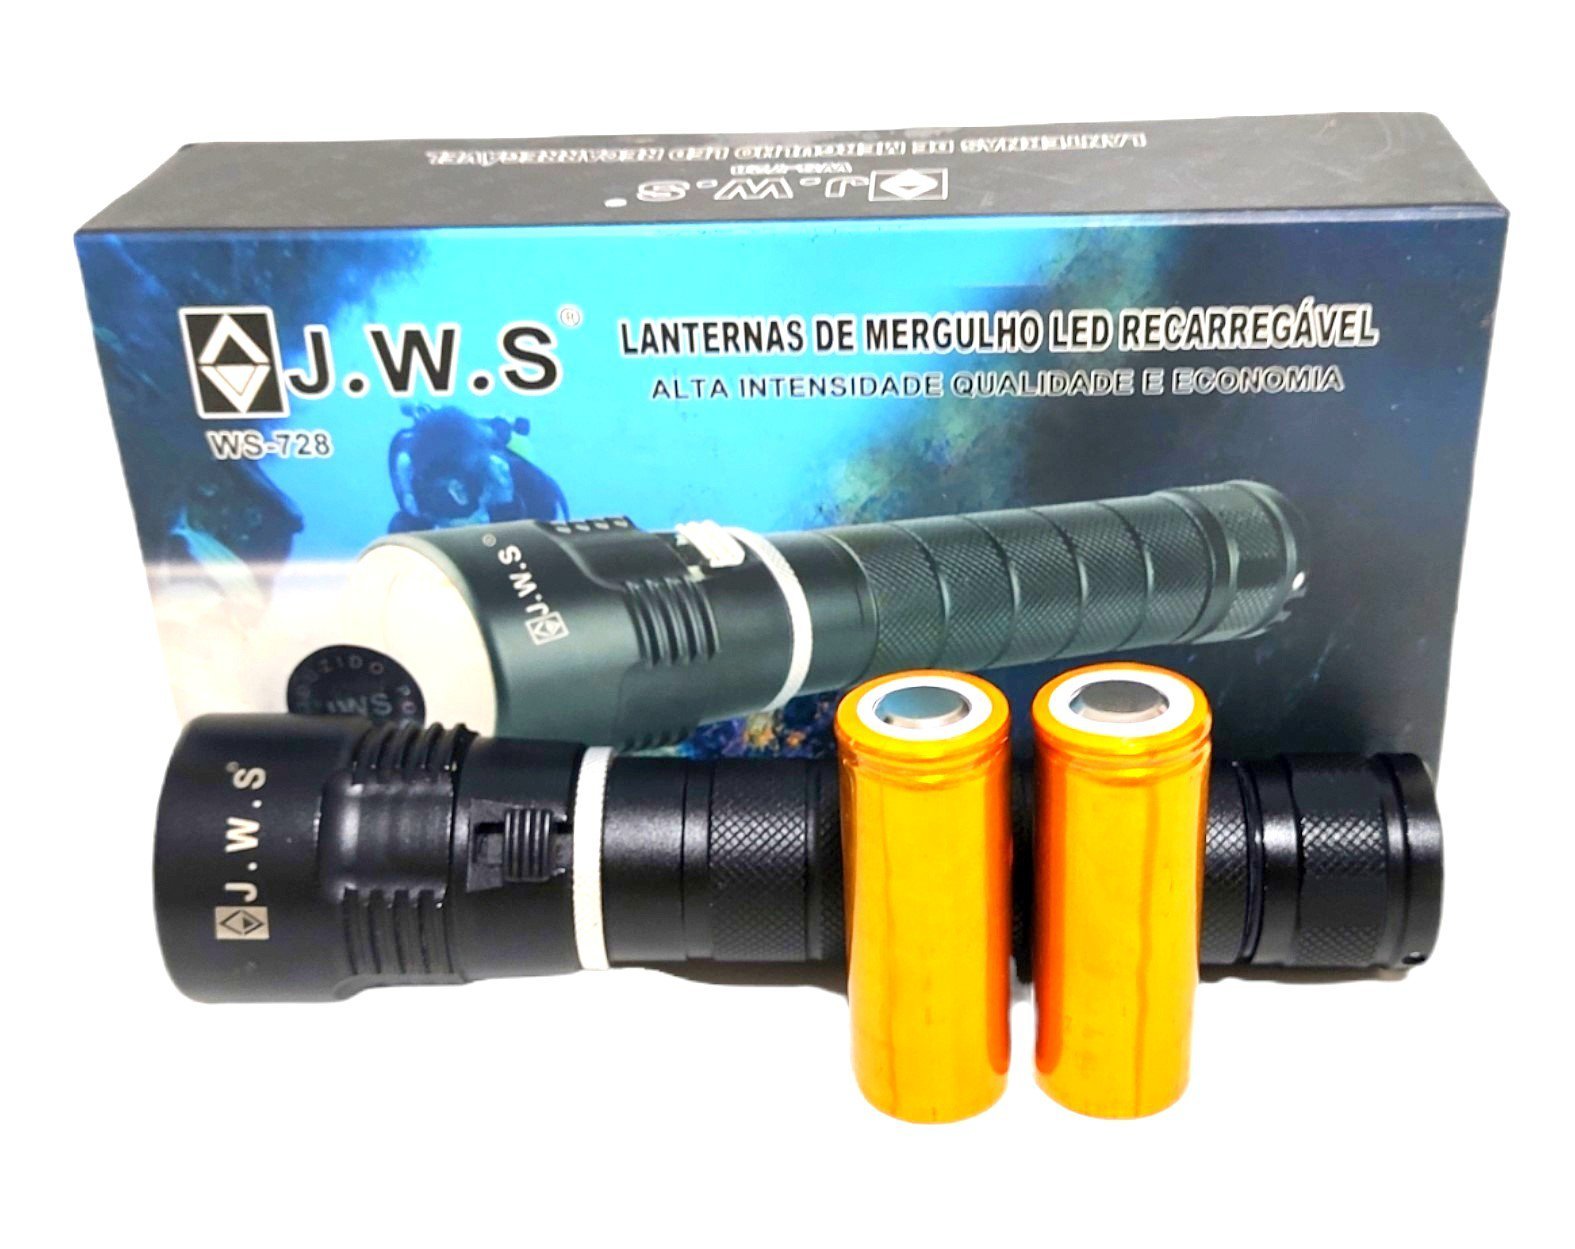 Lanterna Mergulho Profissional Super Duas Baterias 26650 JWS Lanterna Recarregável mergulho profissi - 5